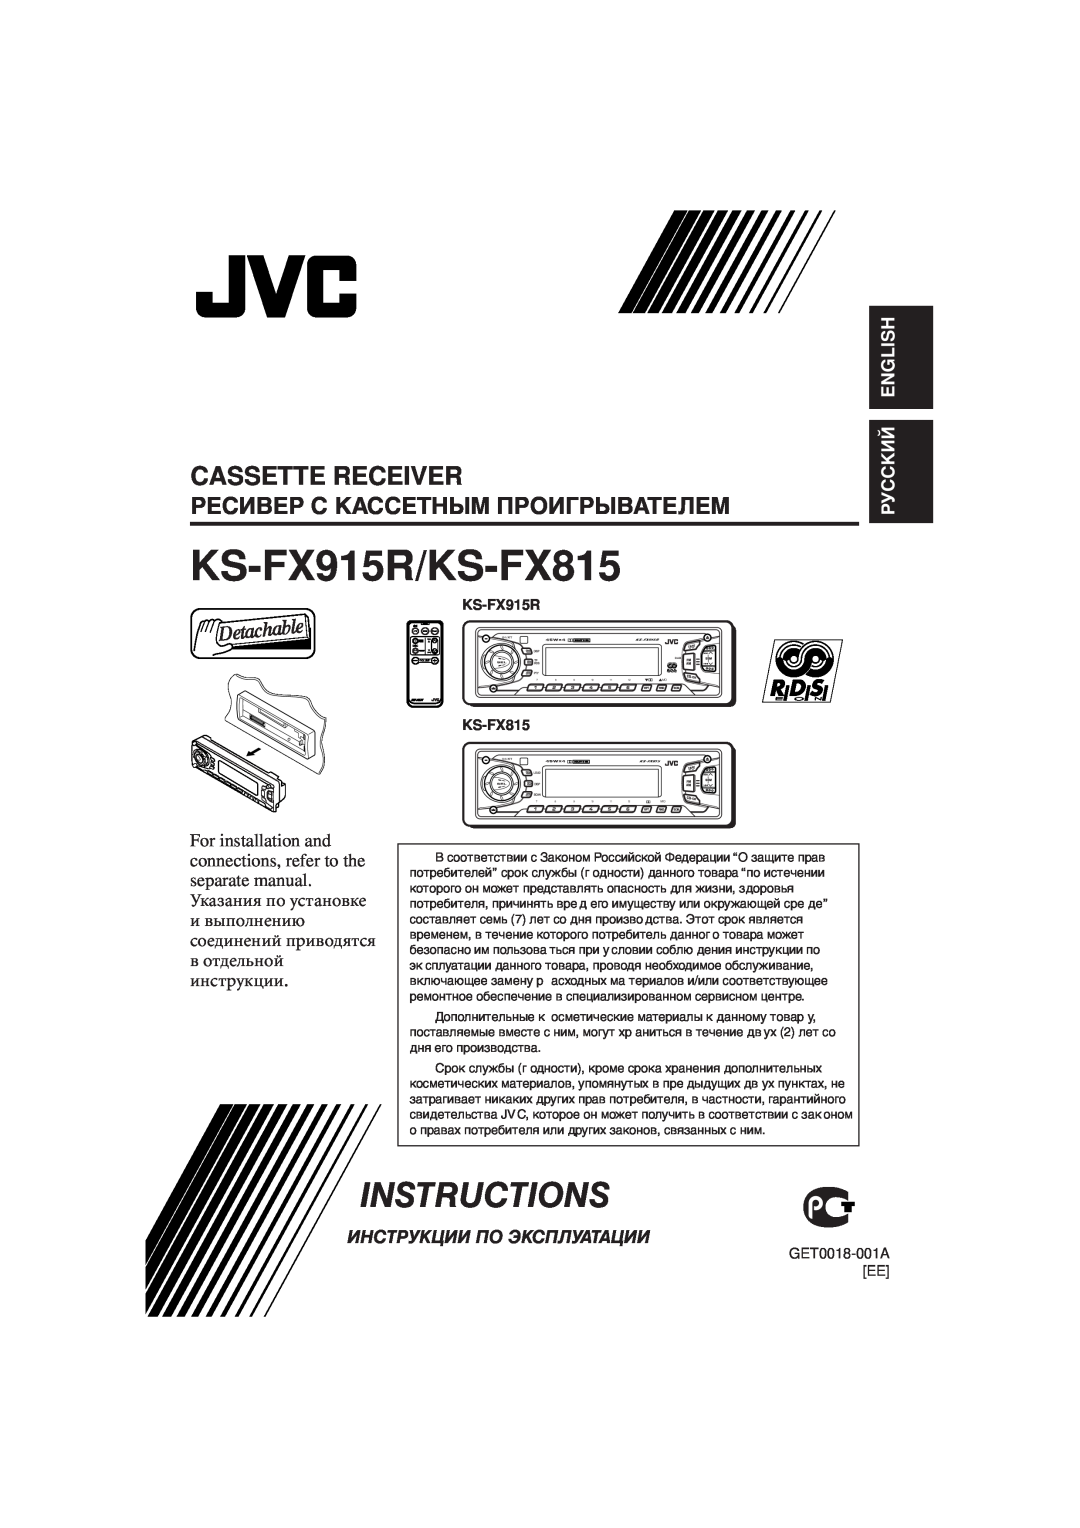 JVC manual Cassette Receiver, KS-FX915R/KS-FX815, Instructions, Ресивер С Кассетным Проигрывателем 